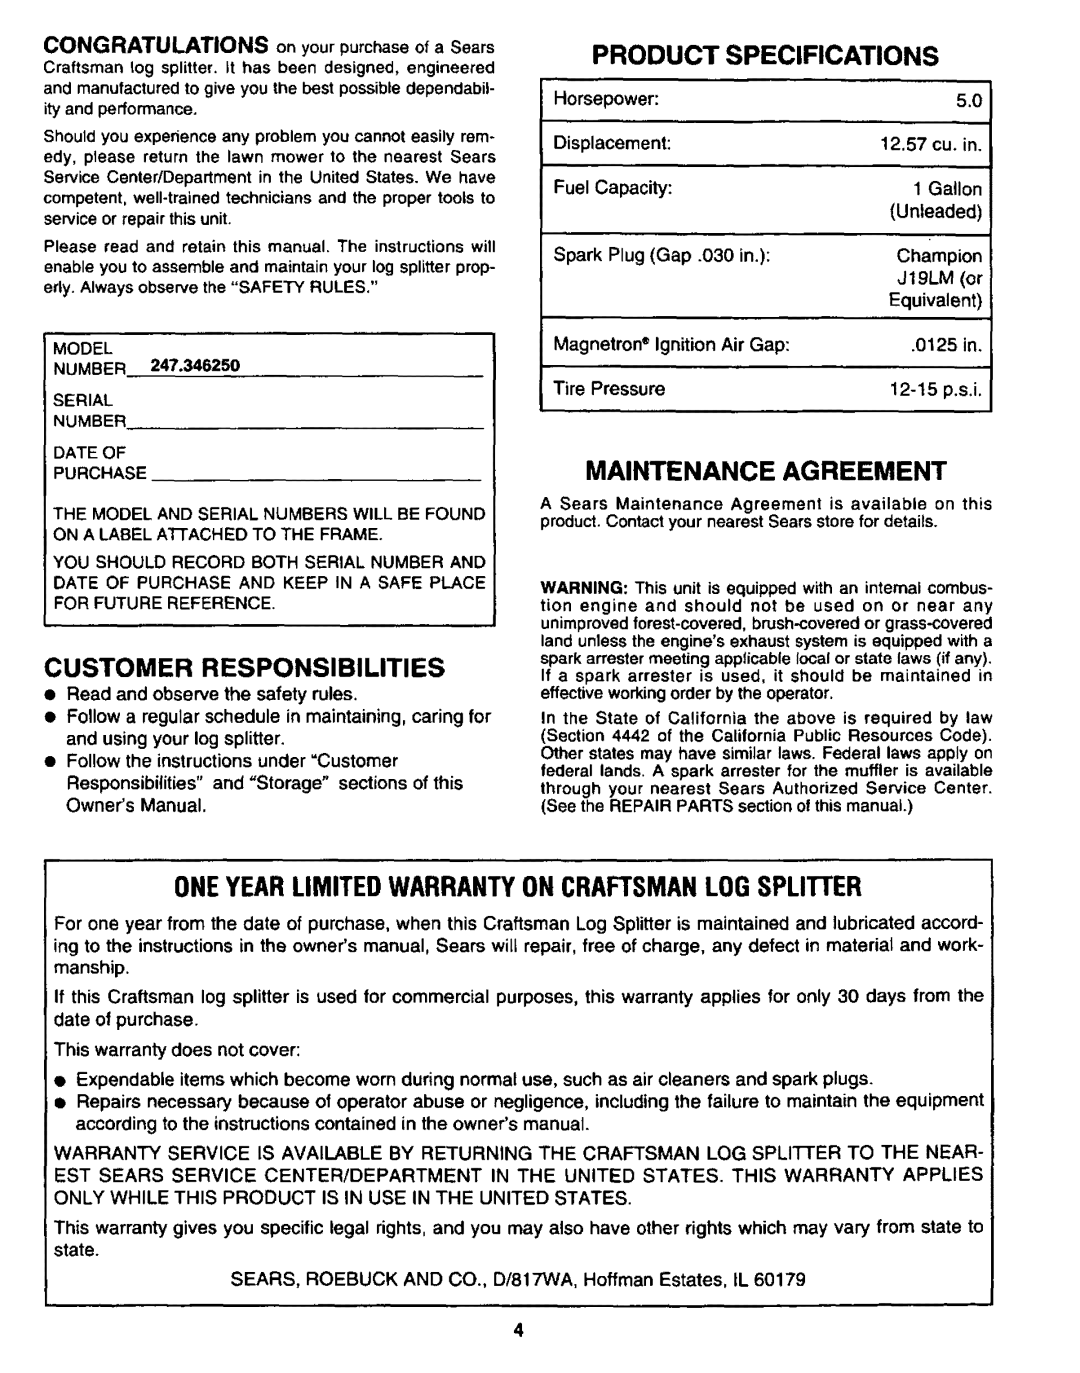 Sears 247.34625 Oneyearlimitedwarrantyon Craftsmanlogsplitter, Customer Responsibilities, Product Specifications 